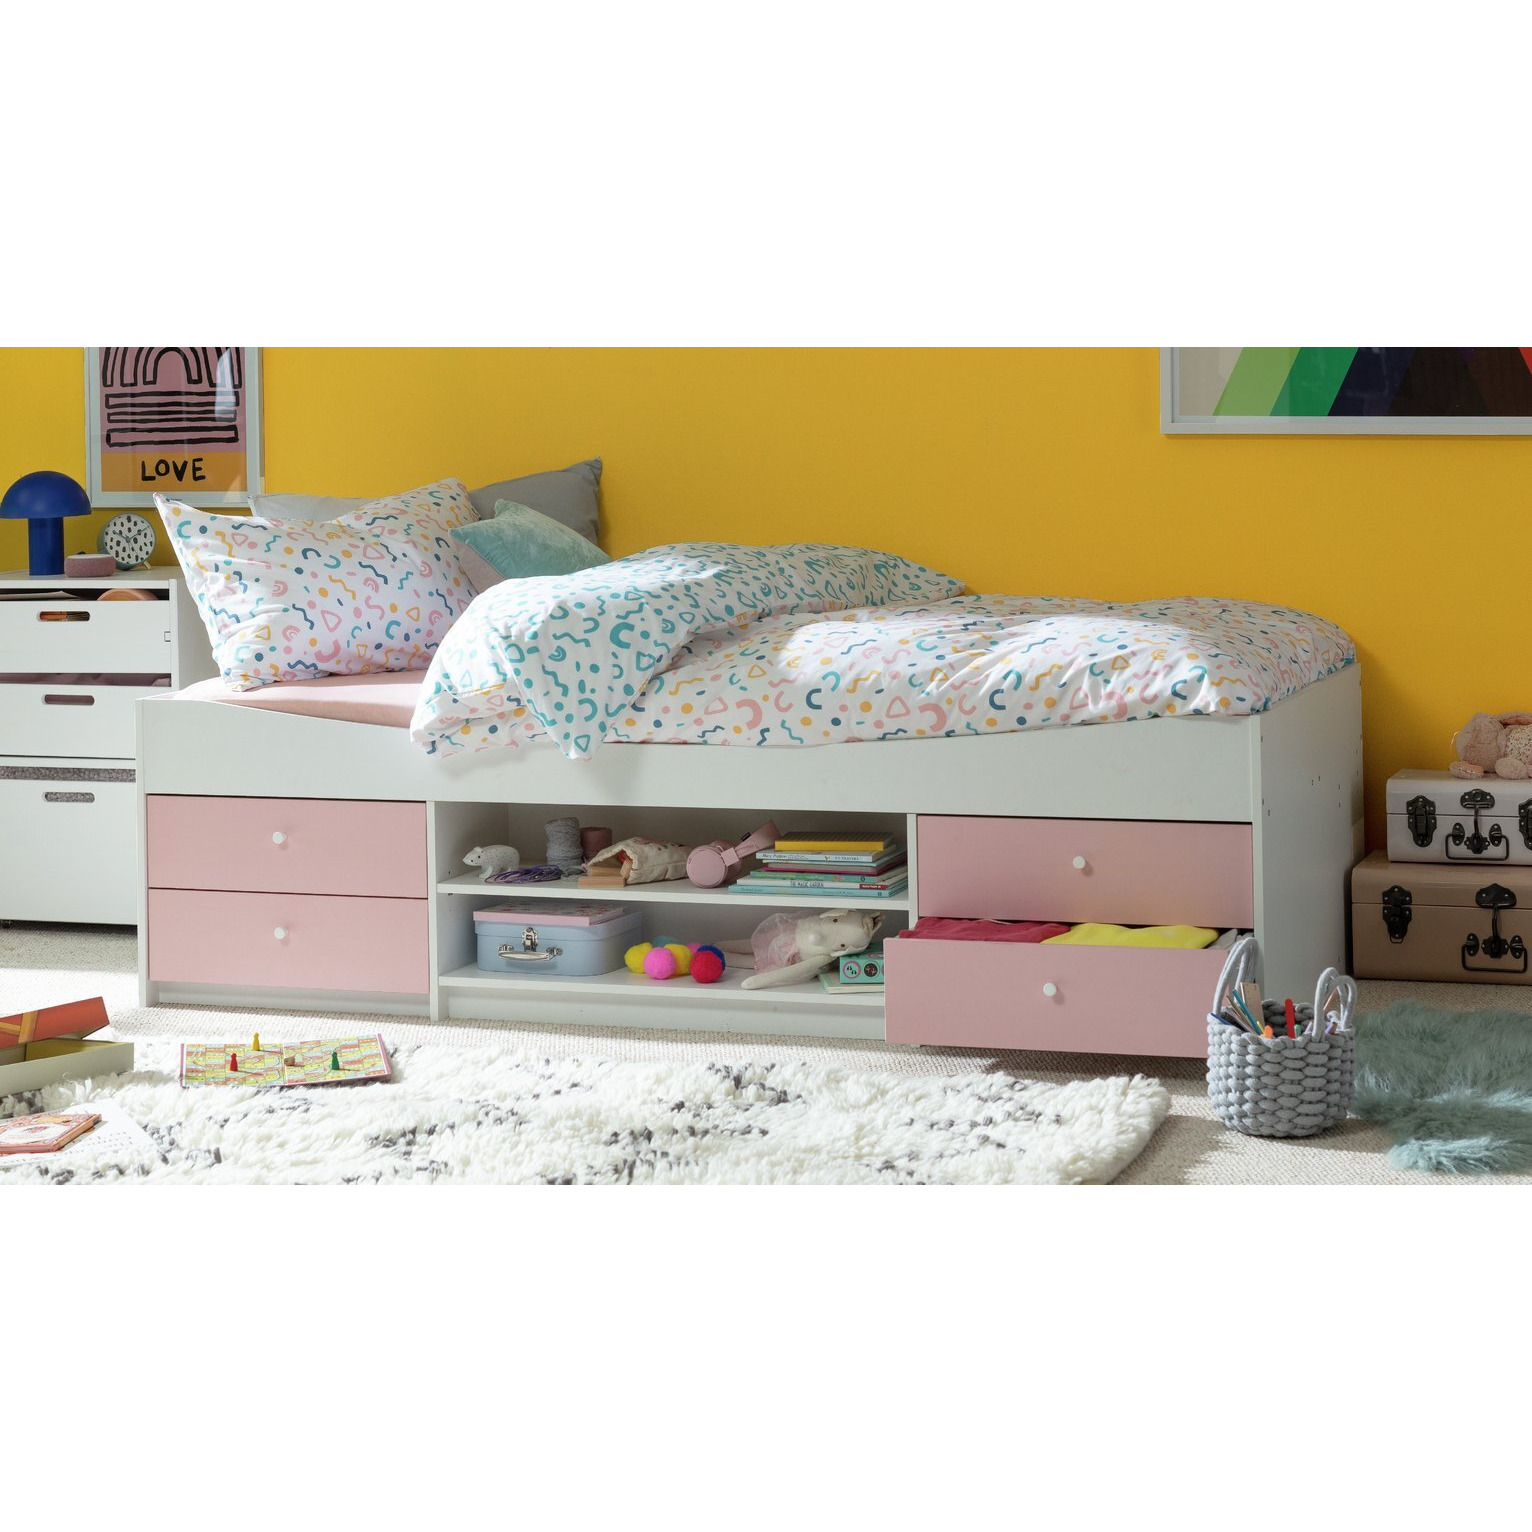 Argos Home Malibu Cabin Bed Frame - Pink & White - image 1